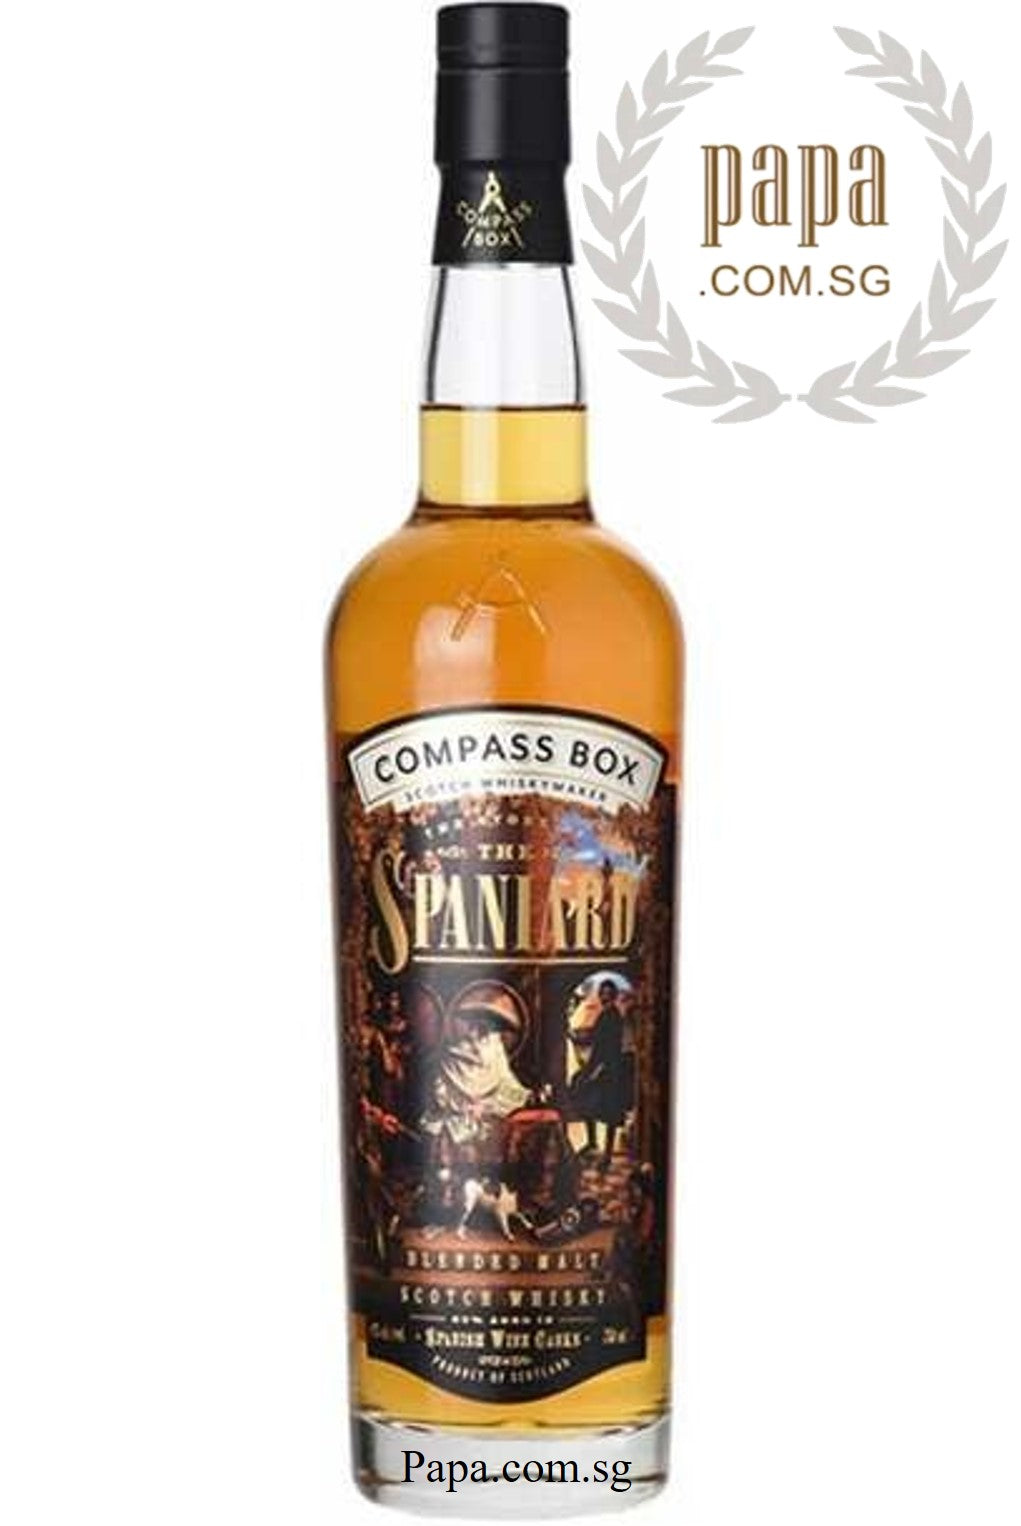 Compass Box Distillery - The Story Of Spaniard - 43% abv